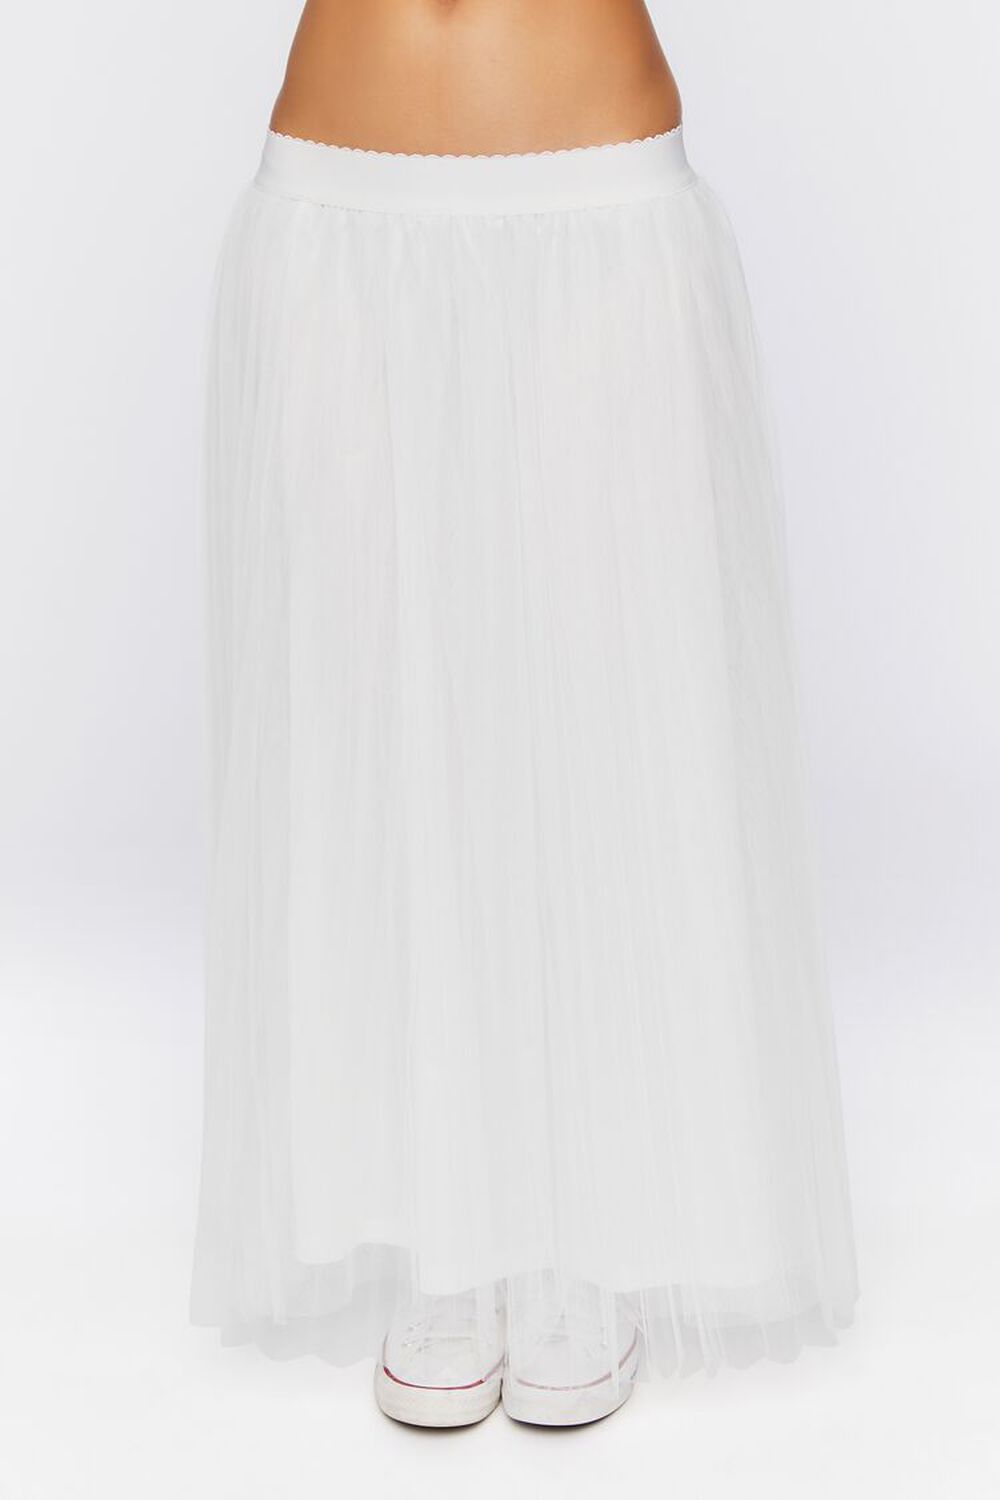 WHITE Tulle Maxi Skirt, image 2